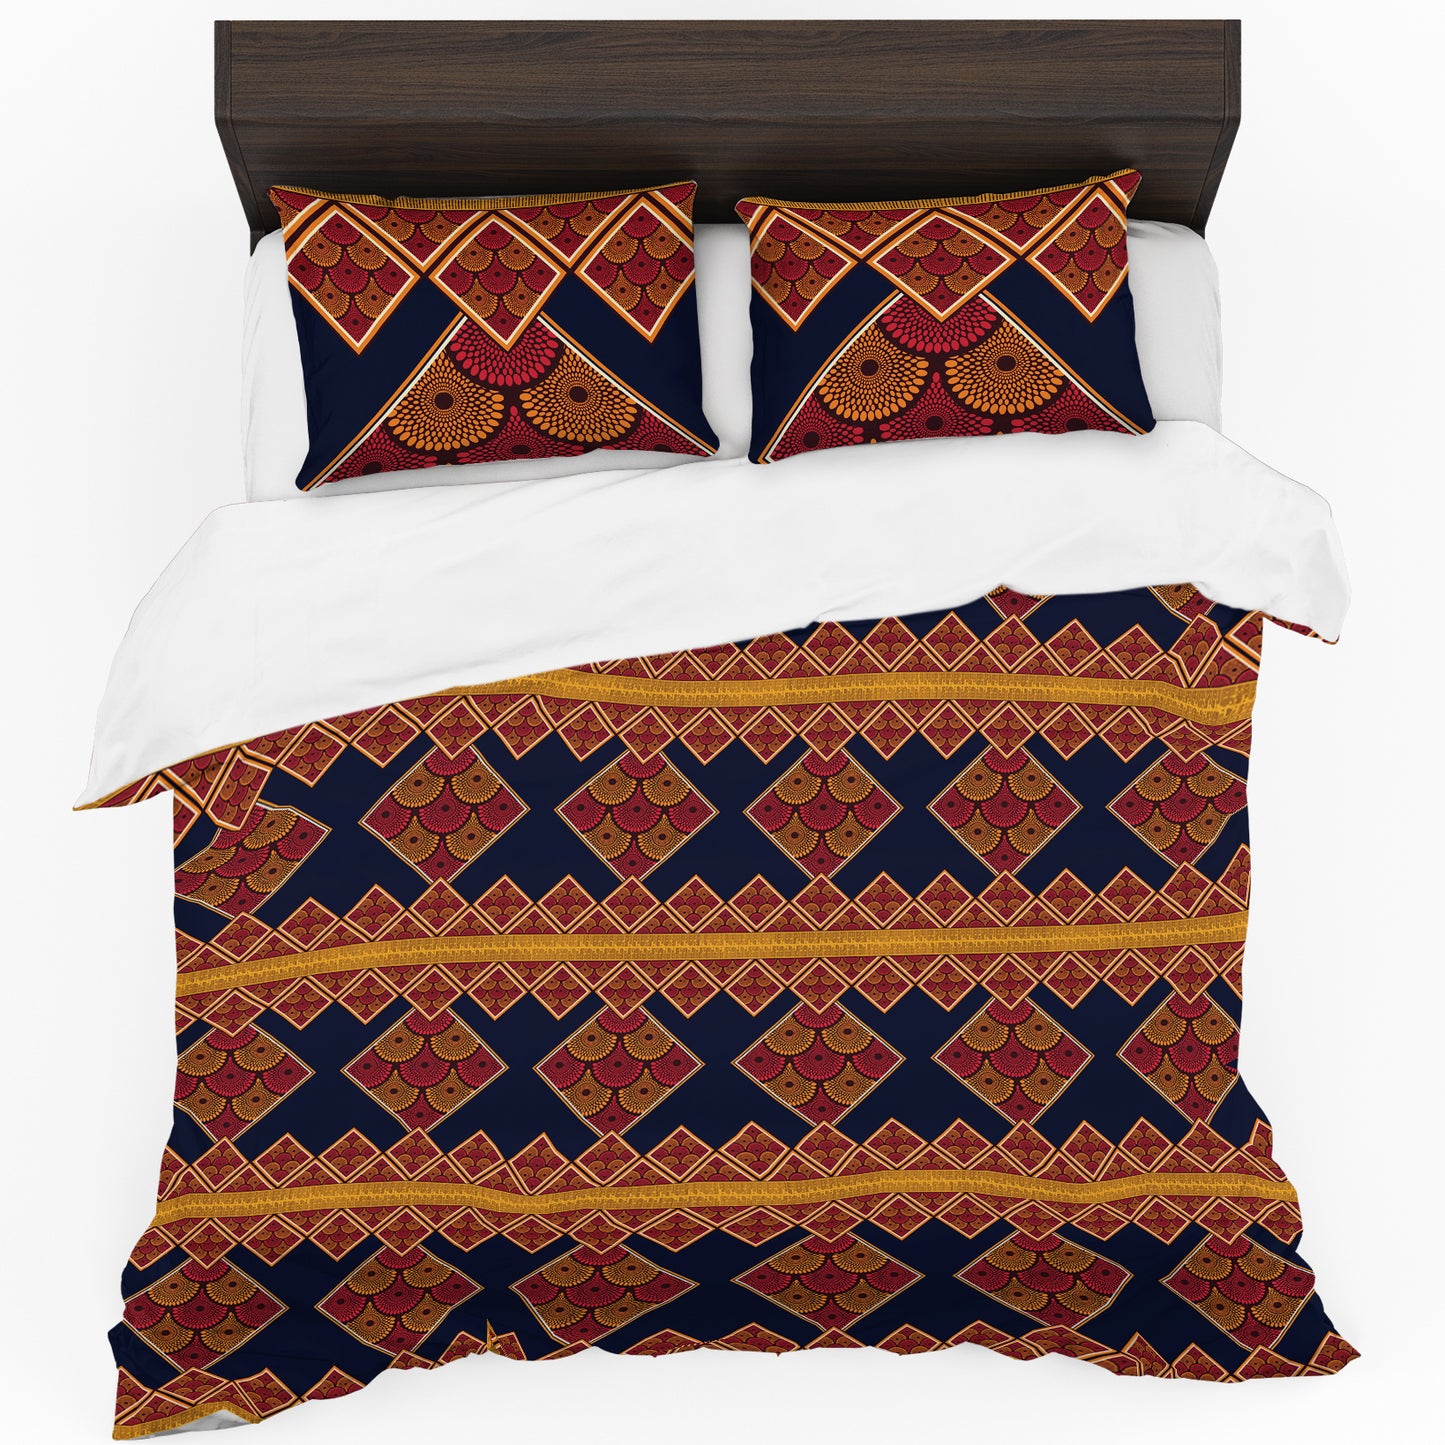 Ethnic African Pattern Duvet Cover Set